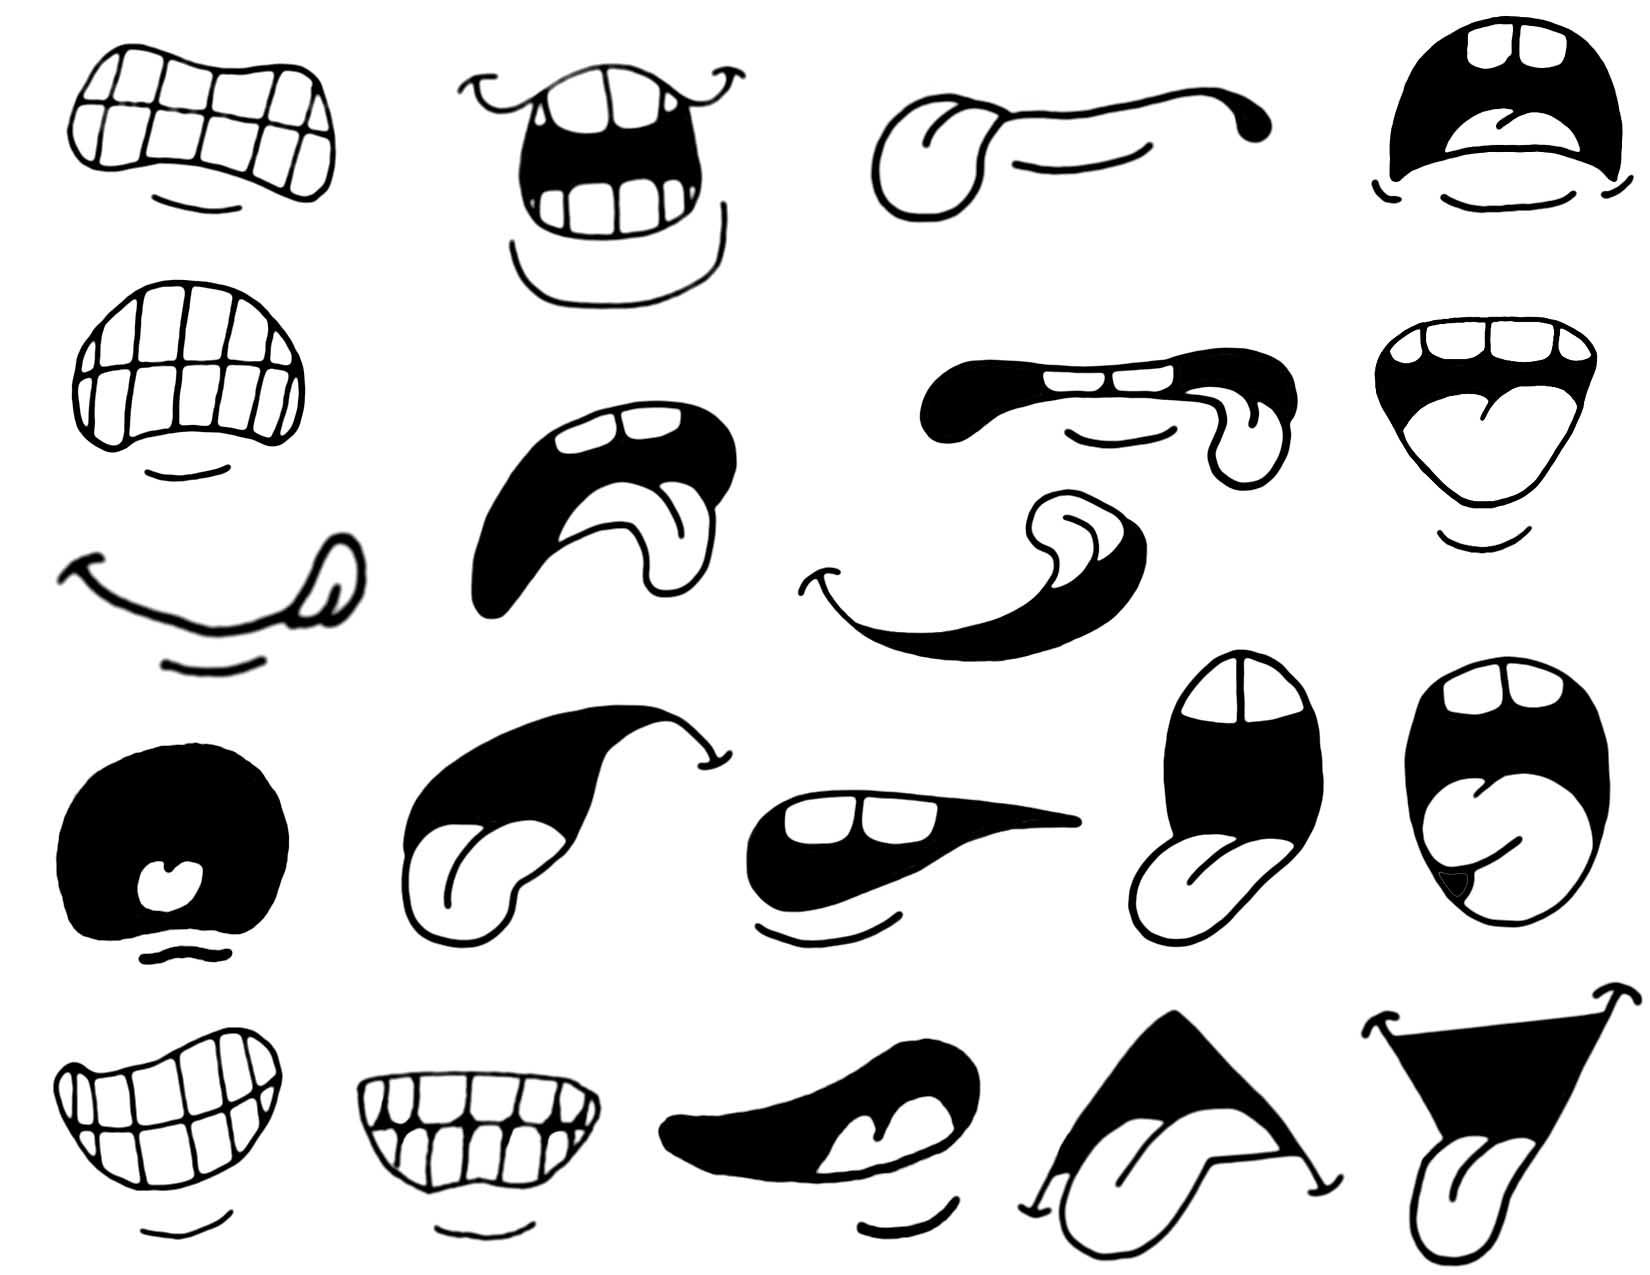 mouth clipart doodle